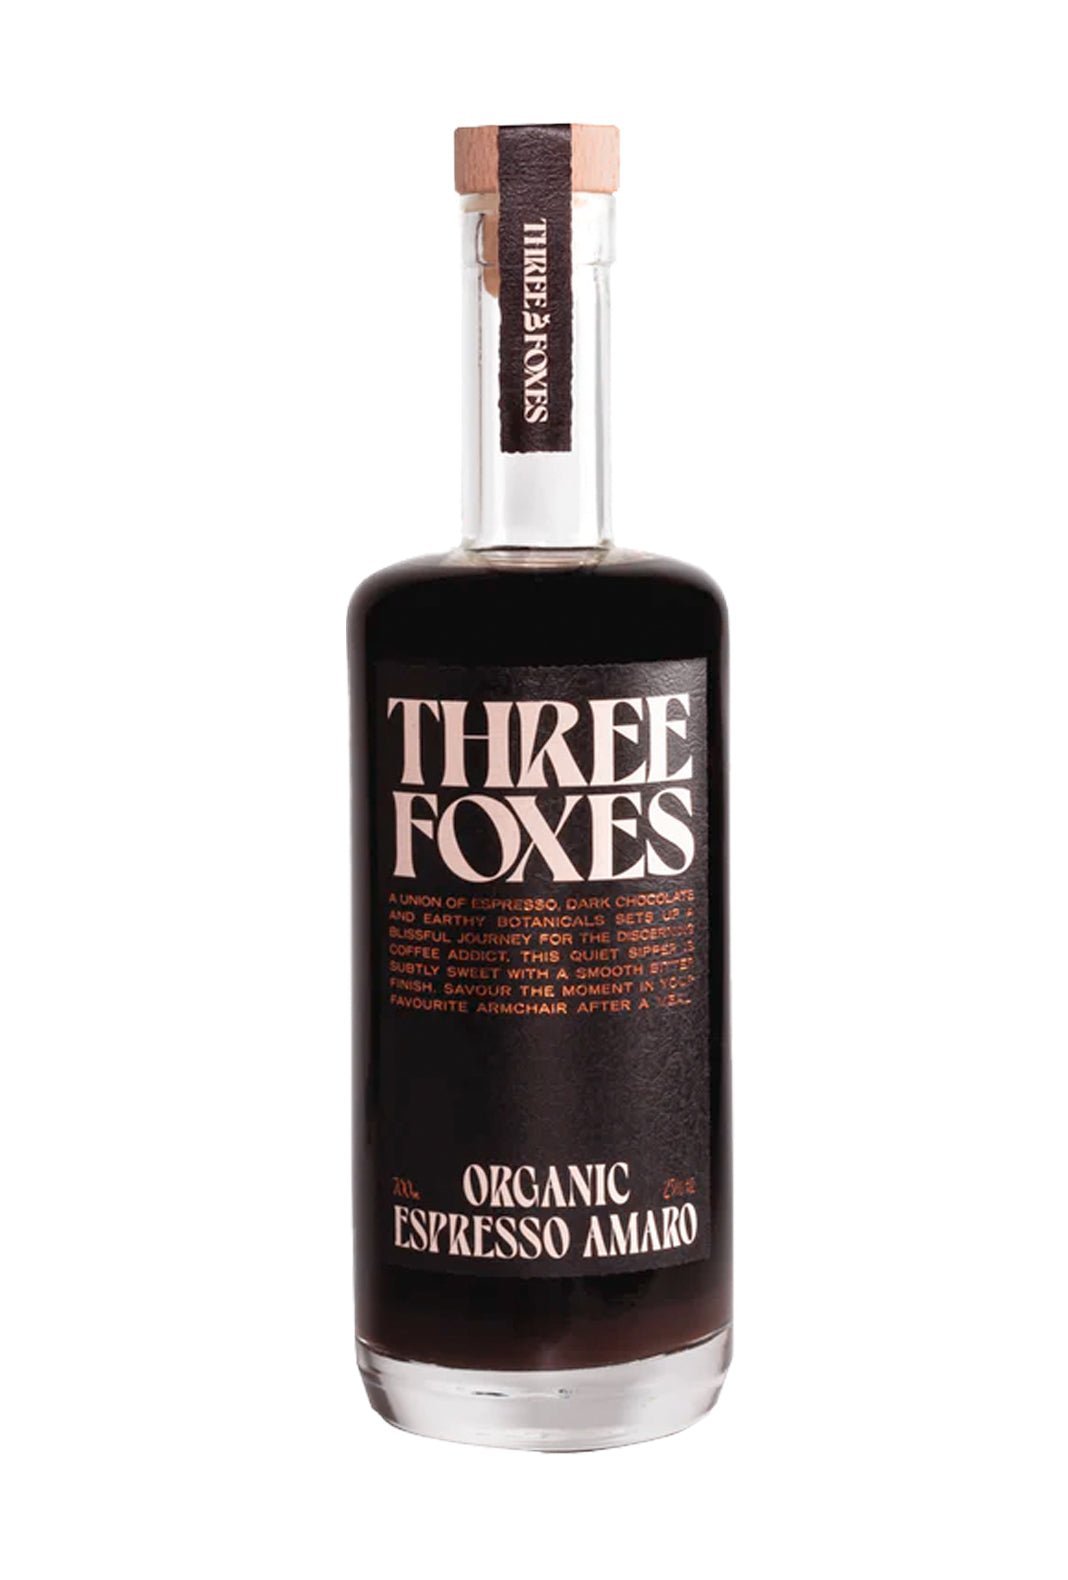 Three Foxes Organic Espresso Amaro 23% 700ml | | Shop online at Spirits of France